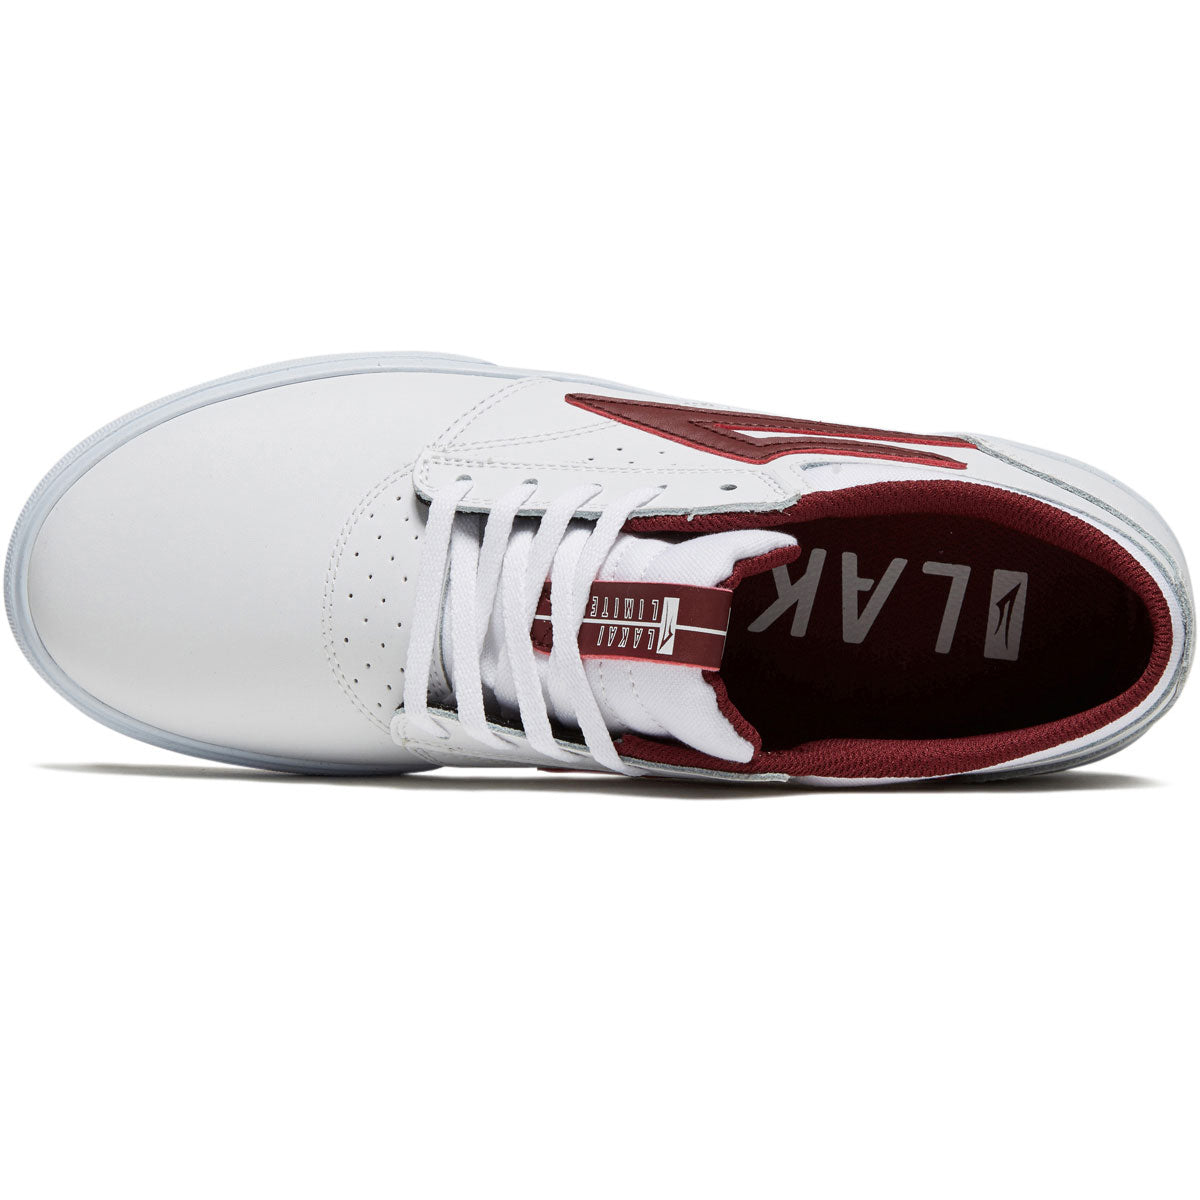 Lakai Griffin Shoes - White/Burgundy Leather image 3